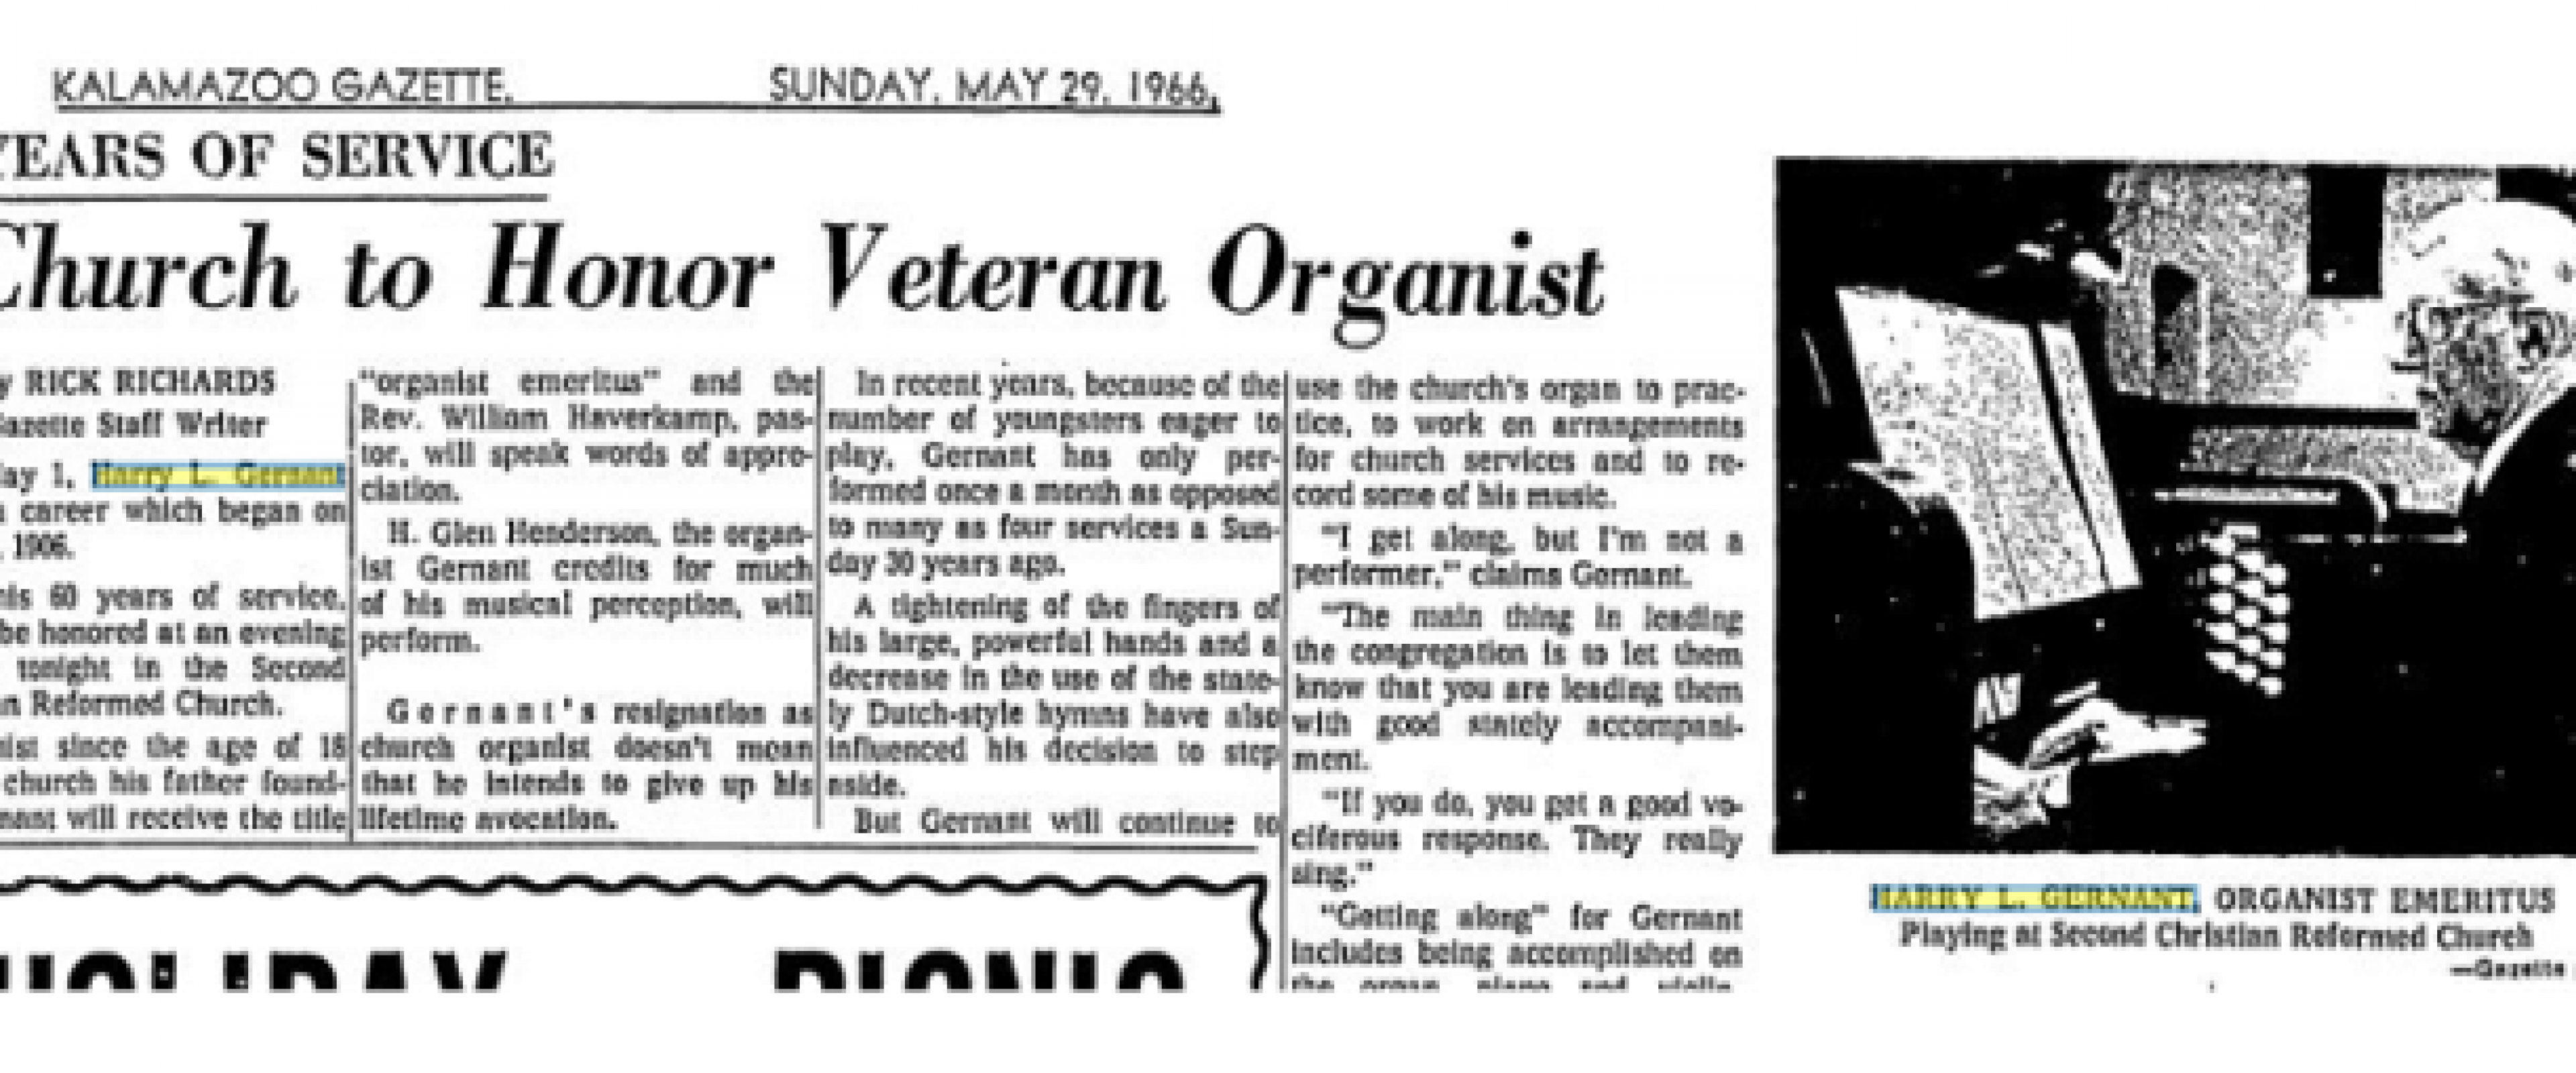 Kalamazoo Gazette article about Garnant titled "Church to Honor Veteran Organist."